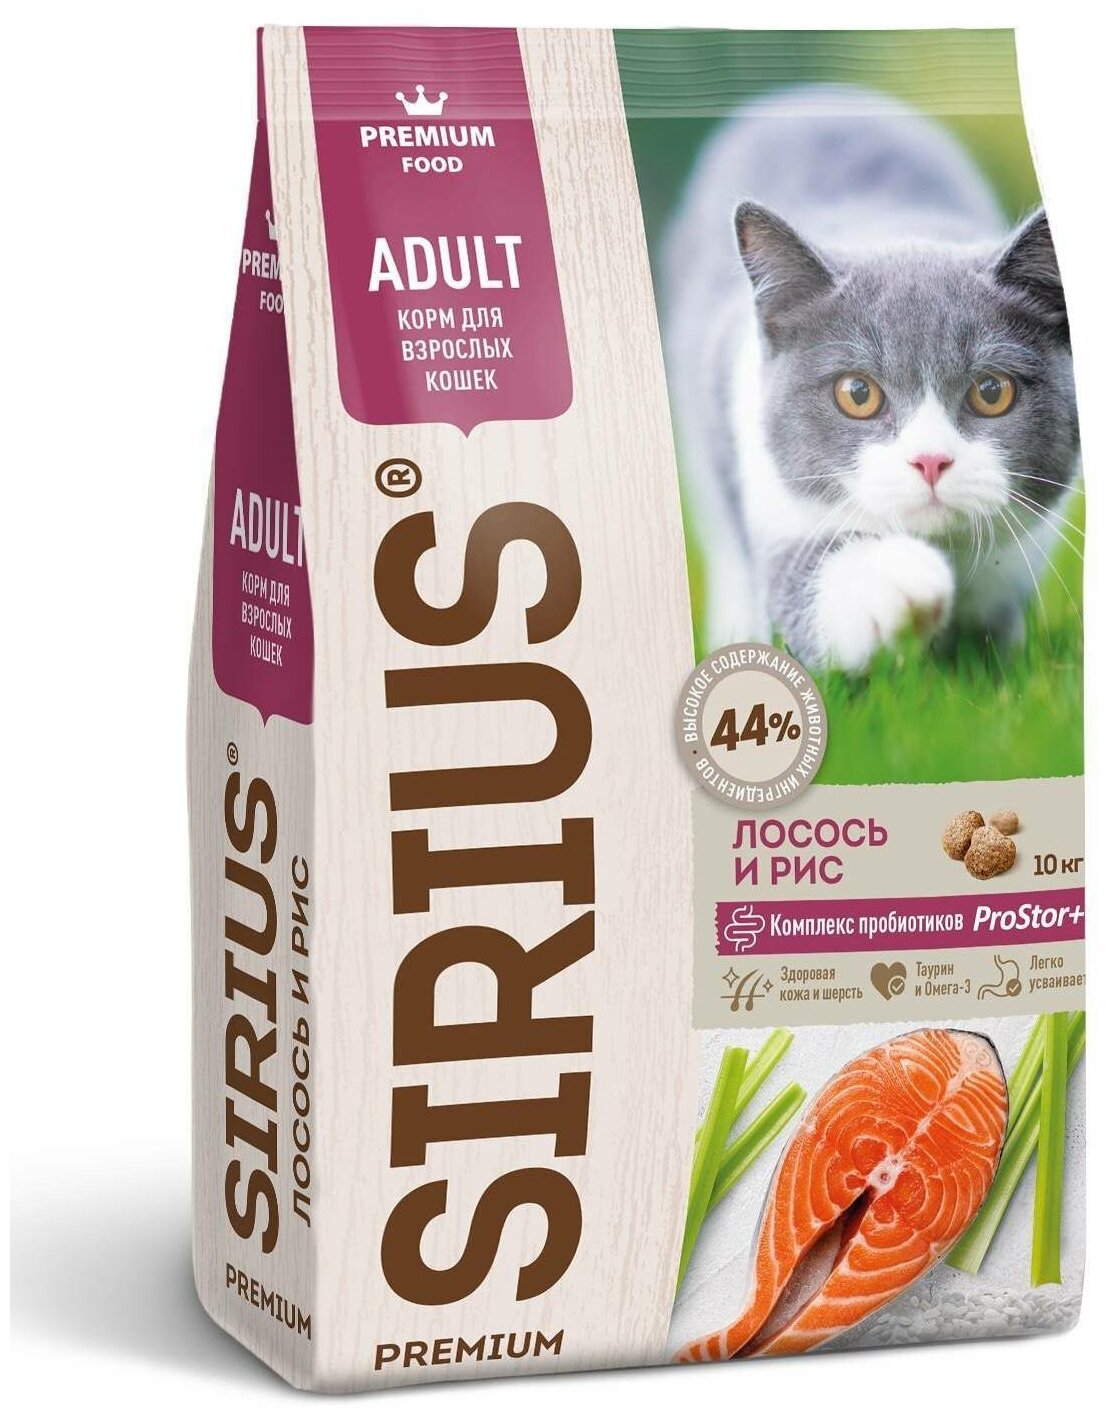 Сухой корм премиум класса Sirius для взрослых кошек 1 уп. х 1 шт. х 10 кг